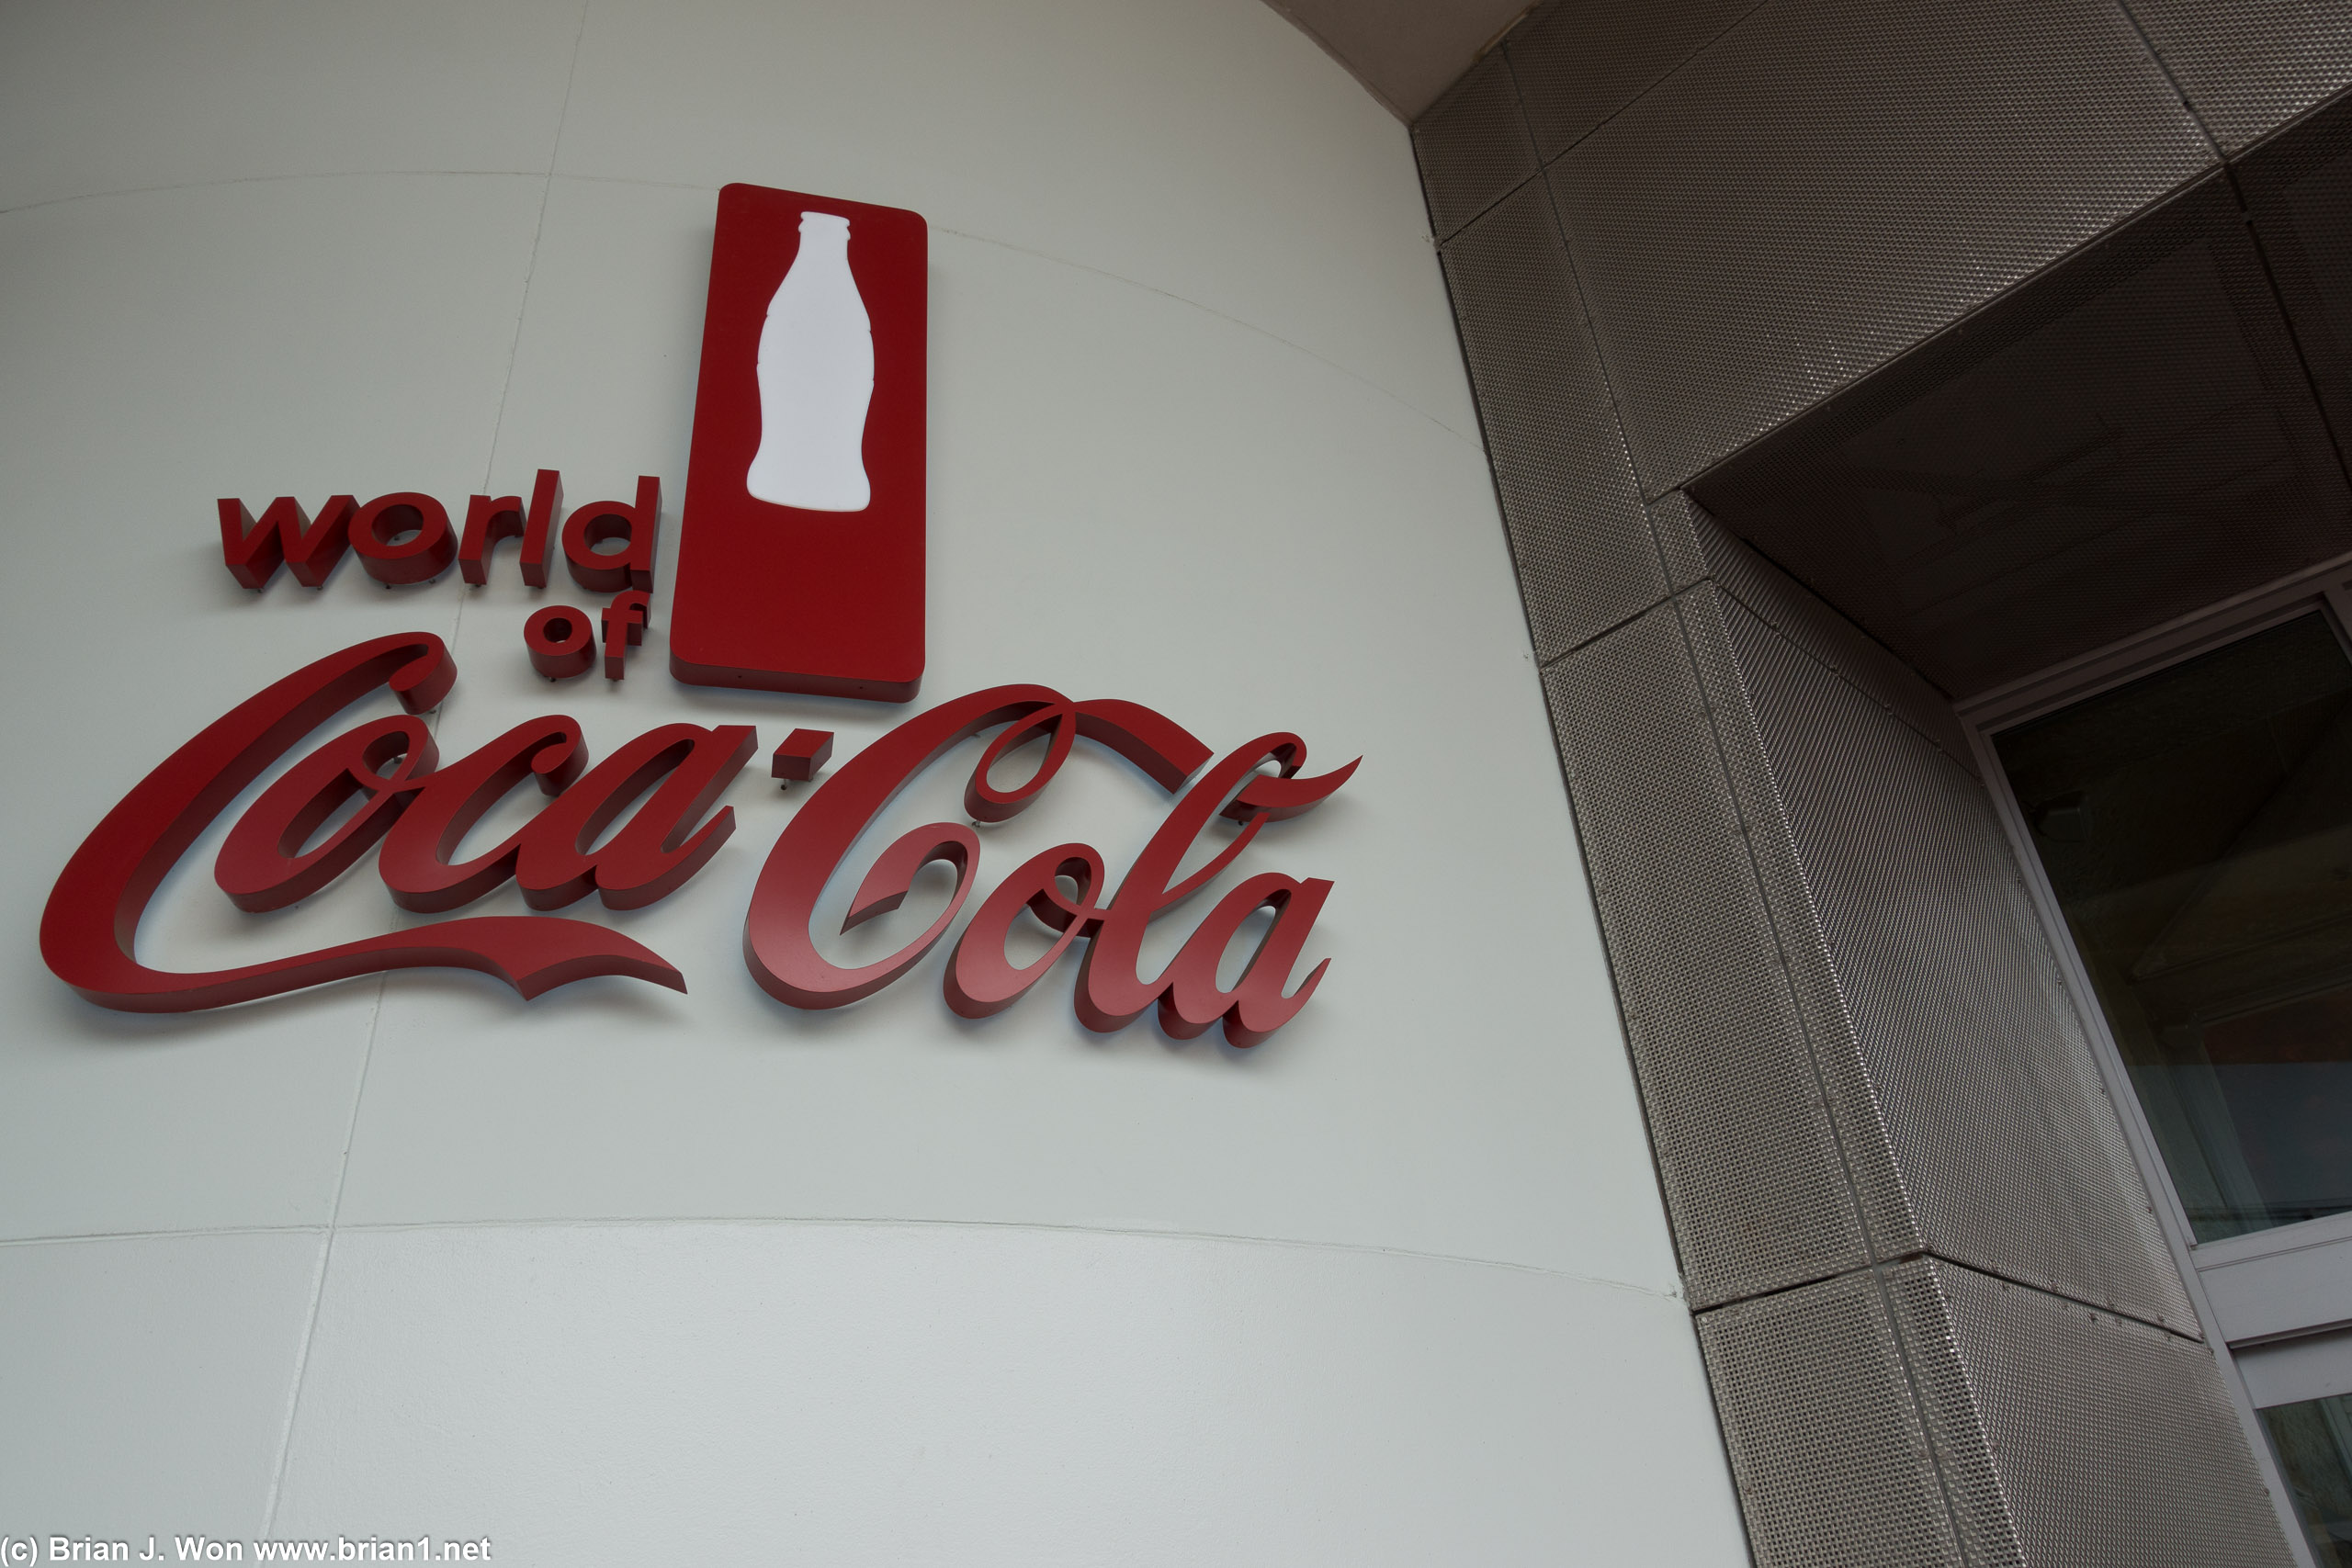 World of Coca-Cola is a surprisingly unassuming building next to the massive Georgia Aquarium.